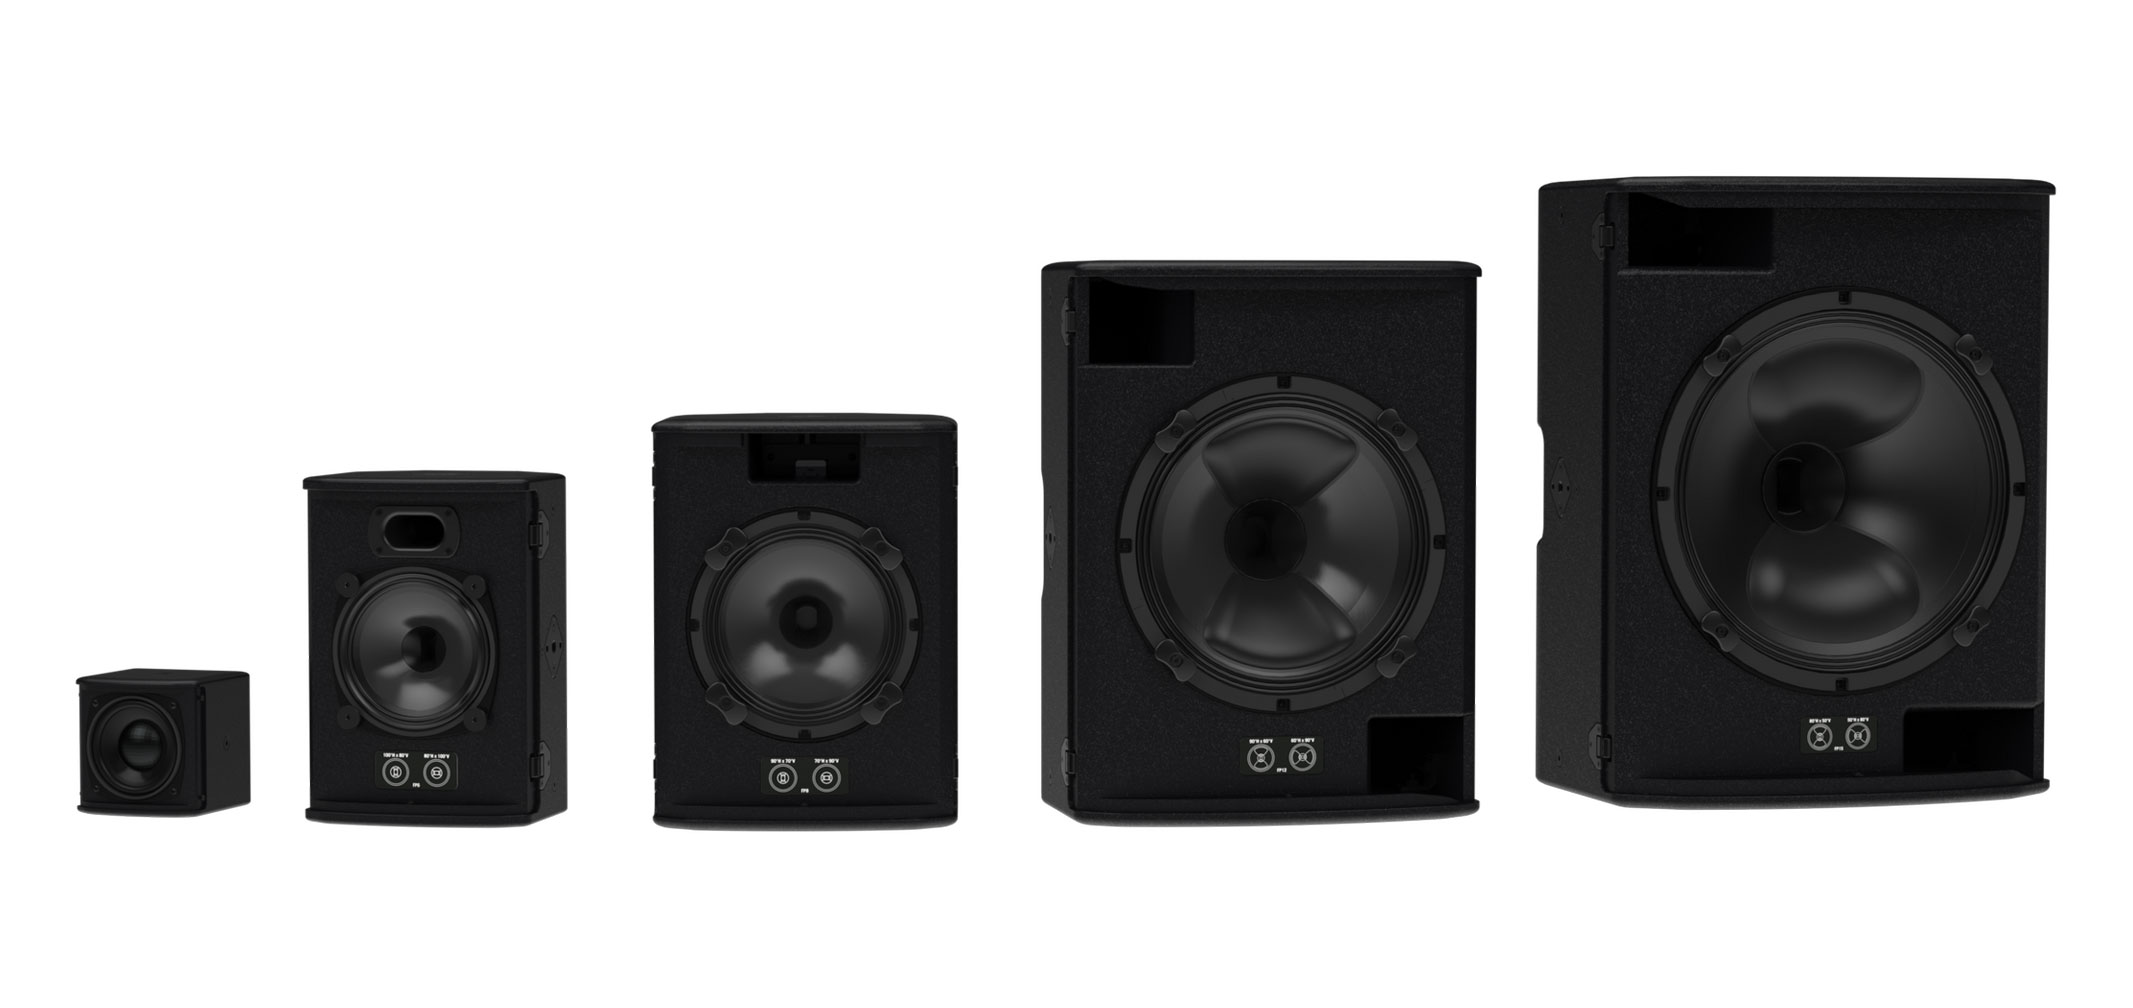 Martin Audioより同軸ポイントソーススピーカーFlexPointシリーズが発表